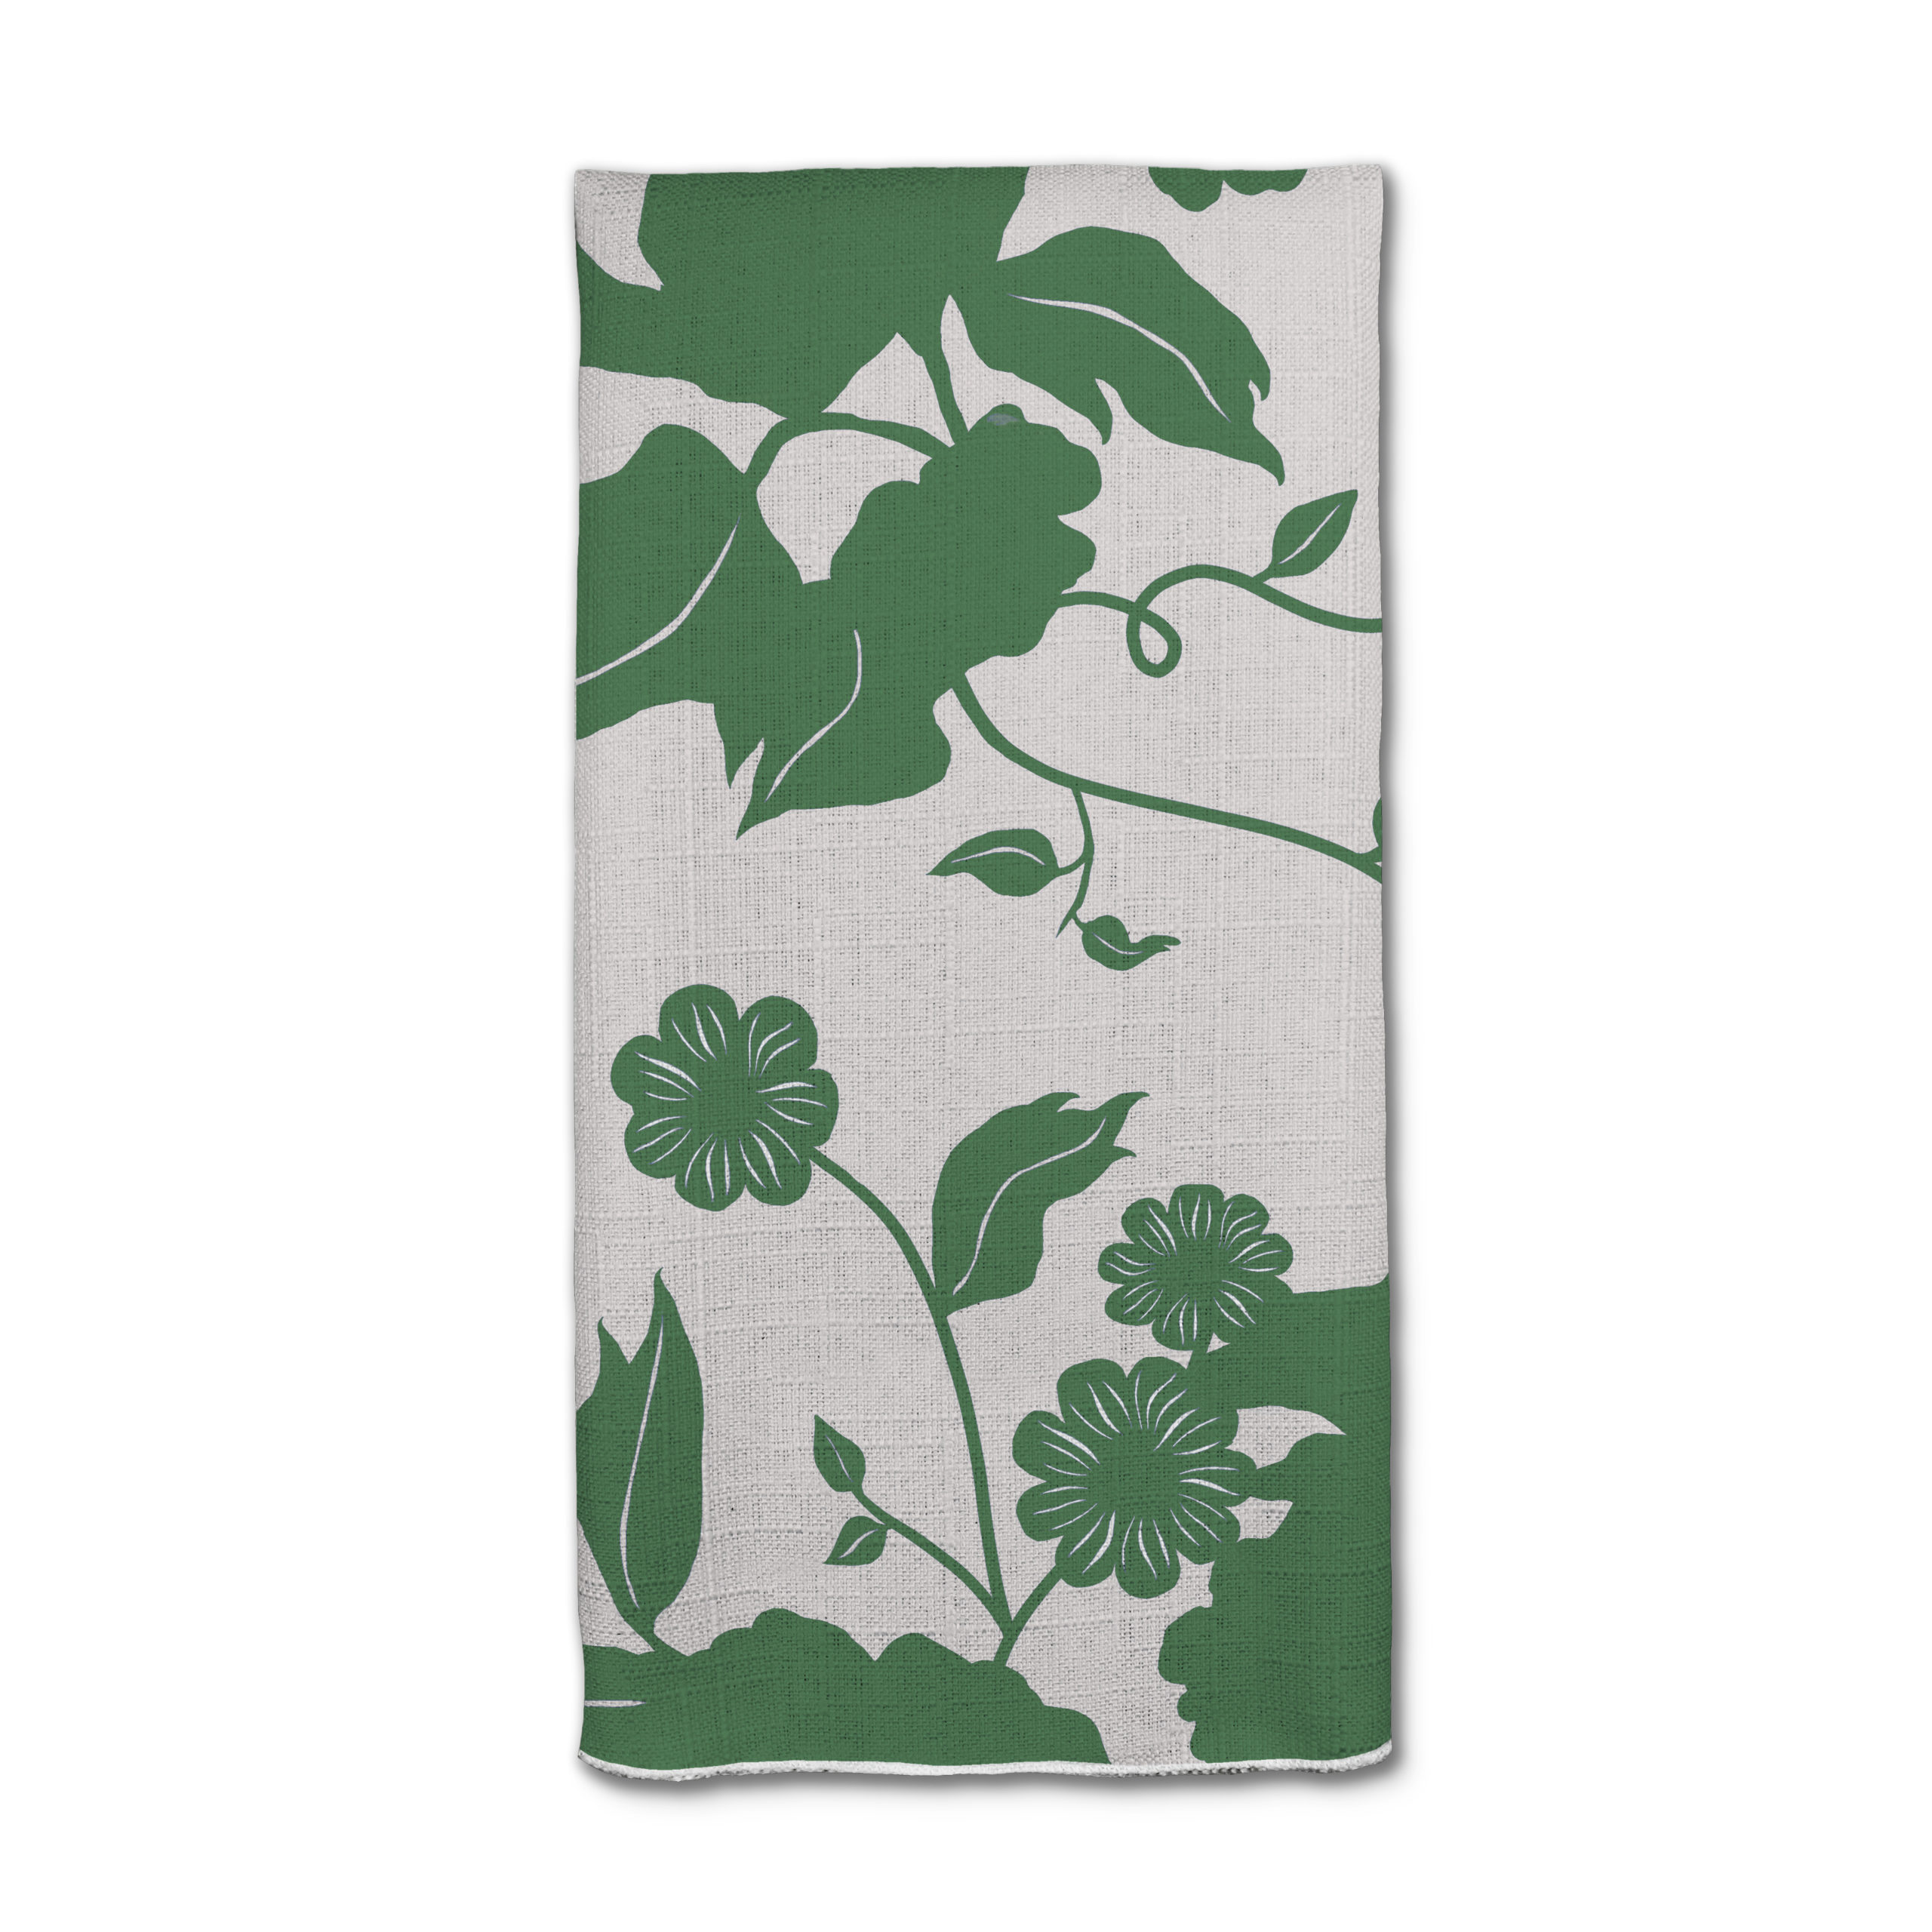 Floral - Antoinette - Green - Event Linen & Decor Rentals